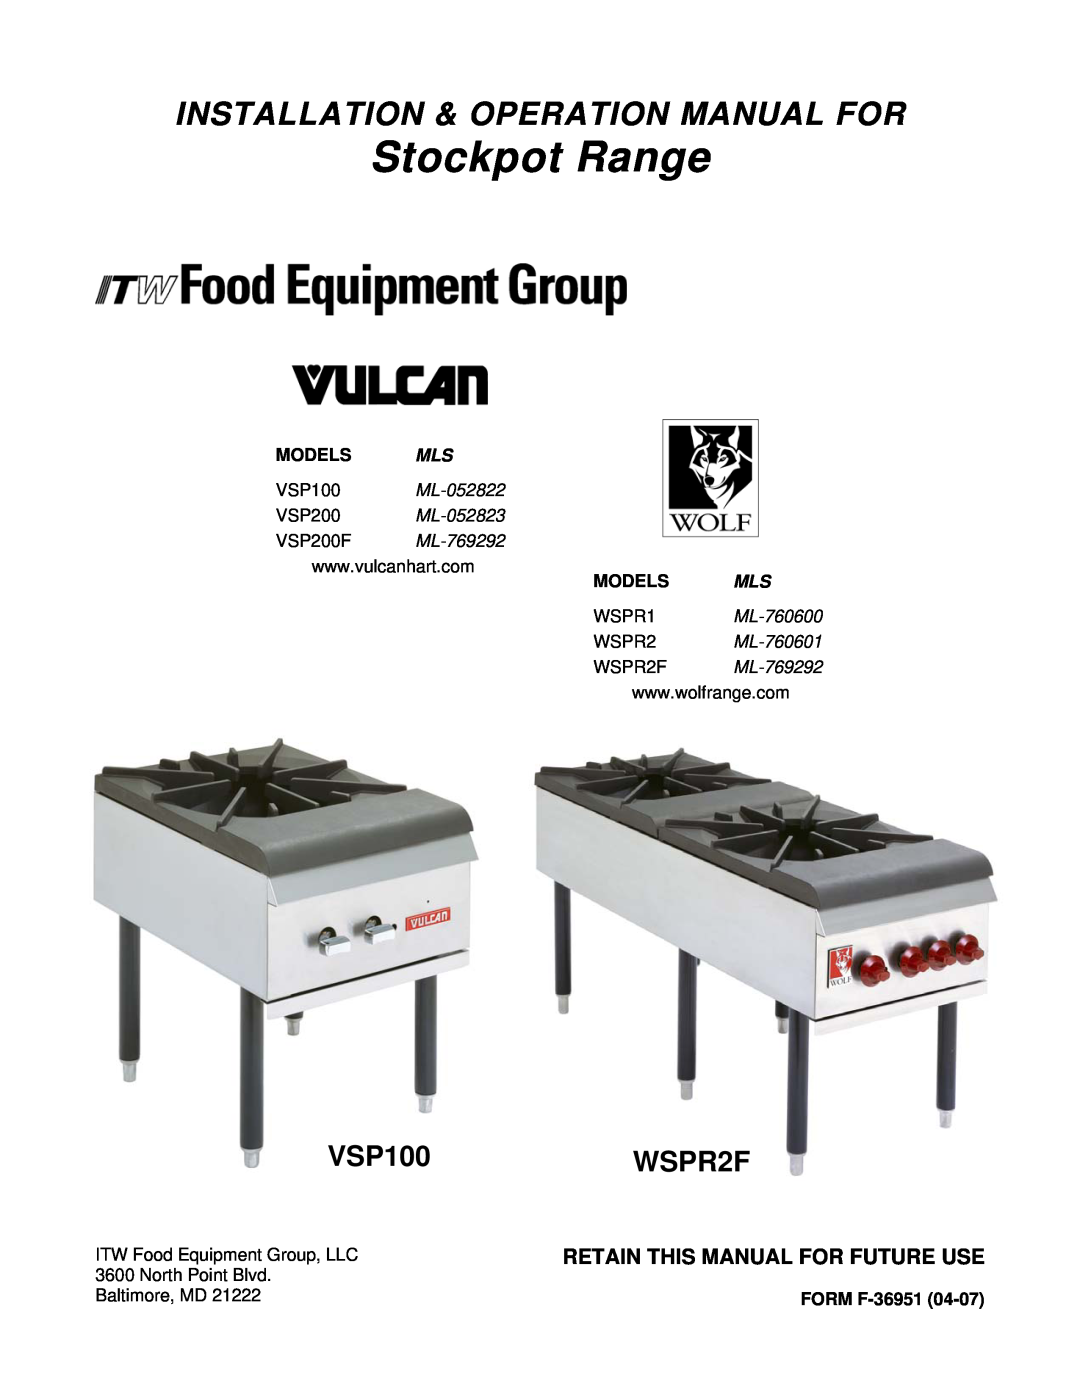 Vulcan-Hart operation manual Stockpot Range, VSP100WSPR2F, Retain This Manual For Future Use, Models Mls, Baltimore, MD 